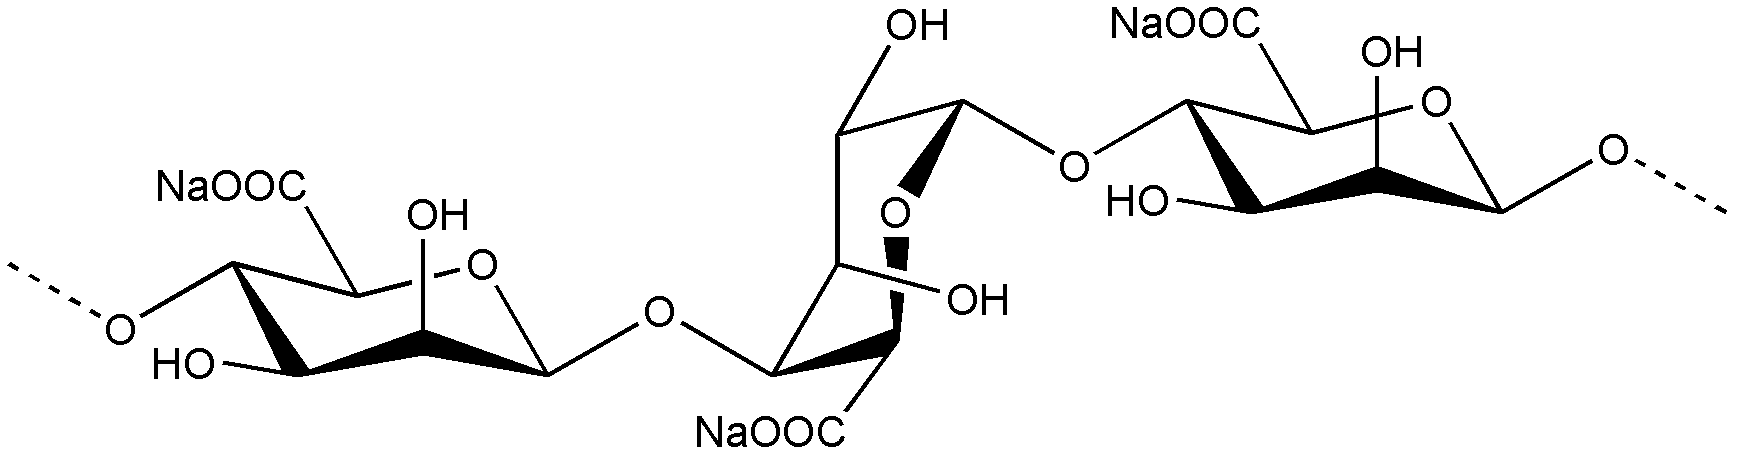 Enzymolysis-chemistry combined method for producing sodium alginate